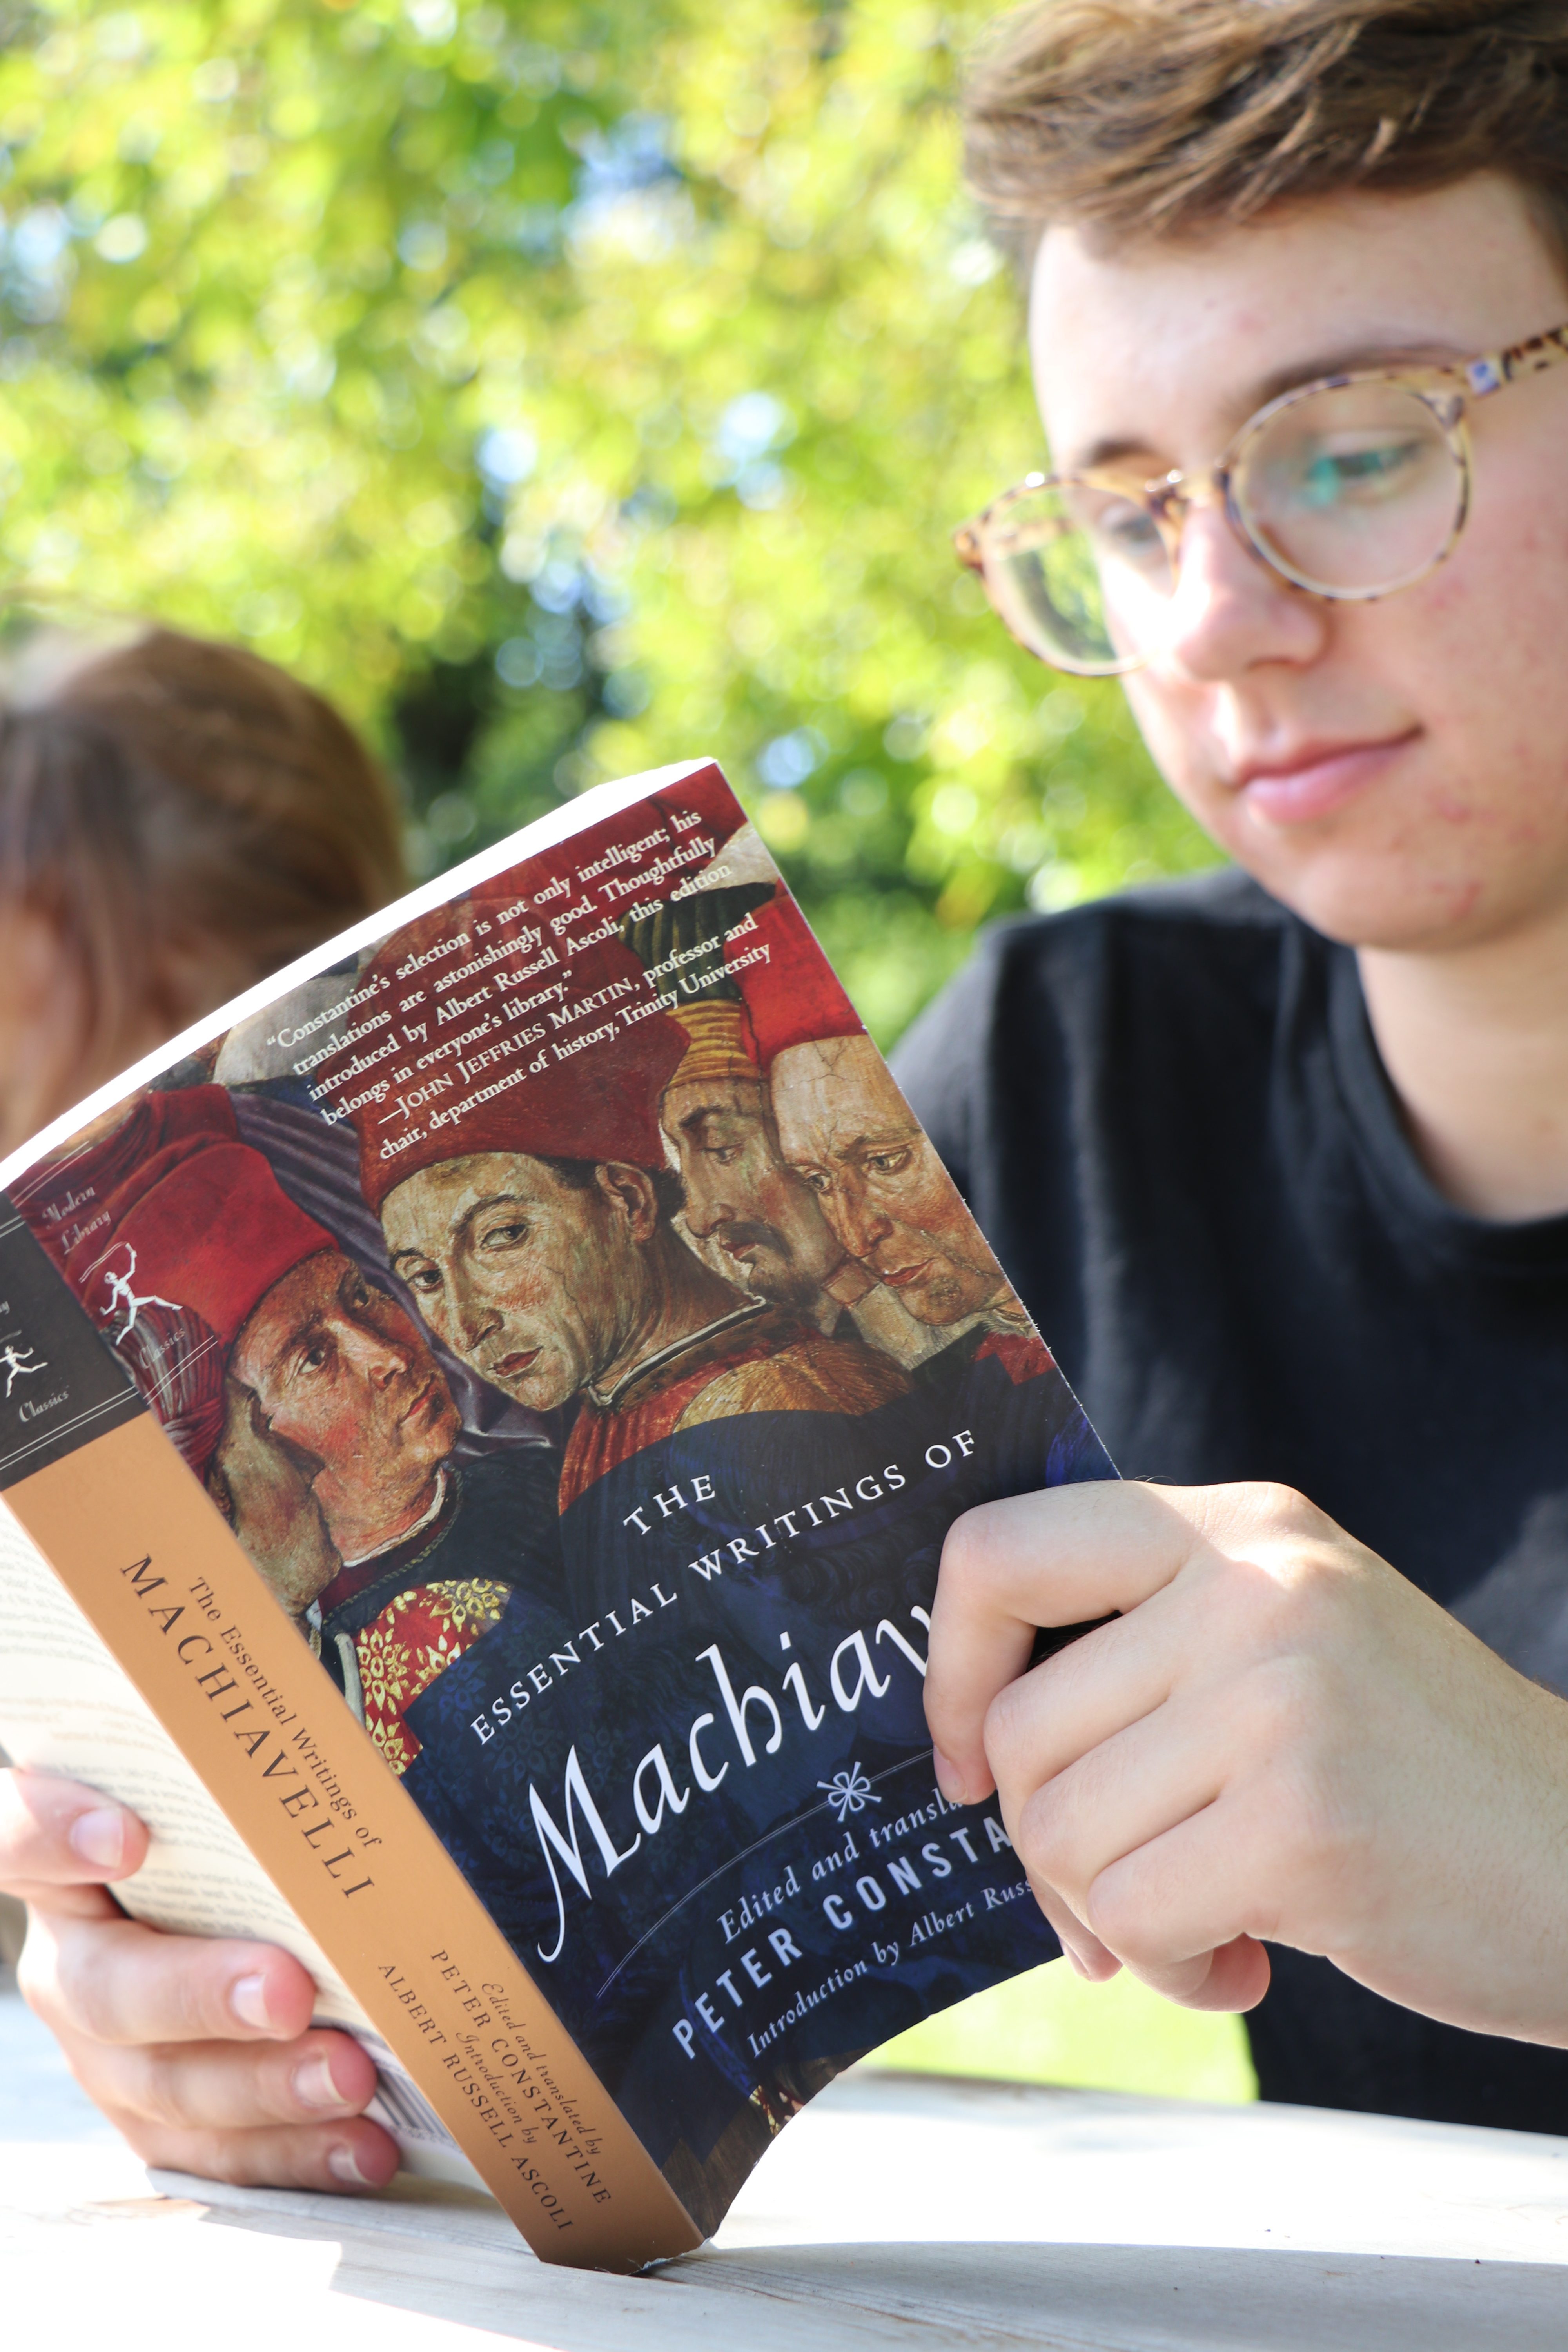 Student reading Machiavelli